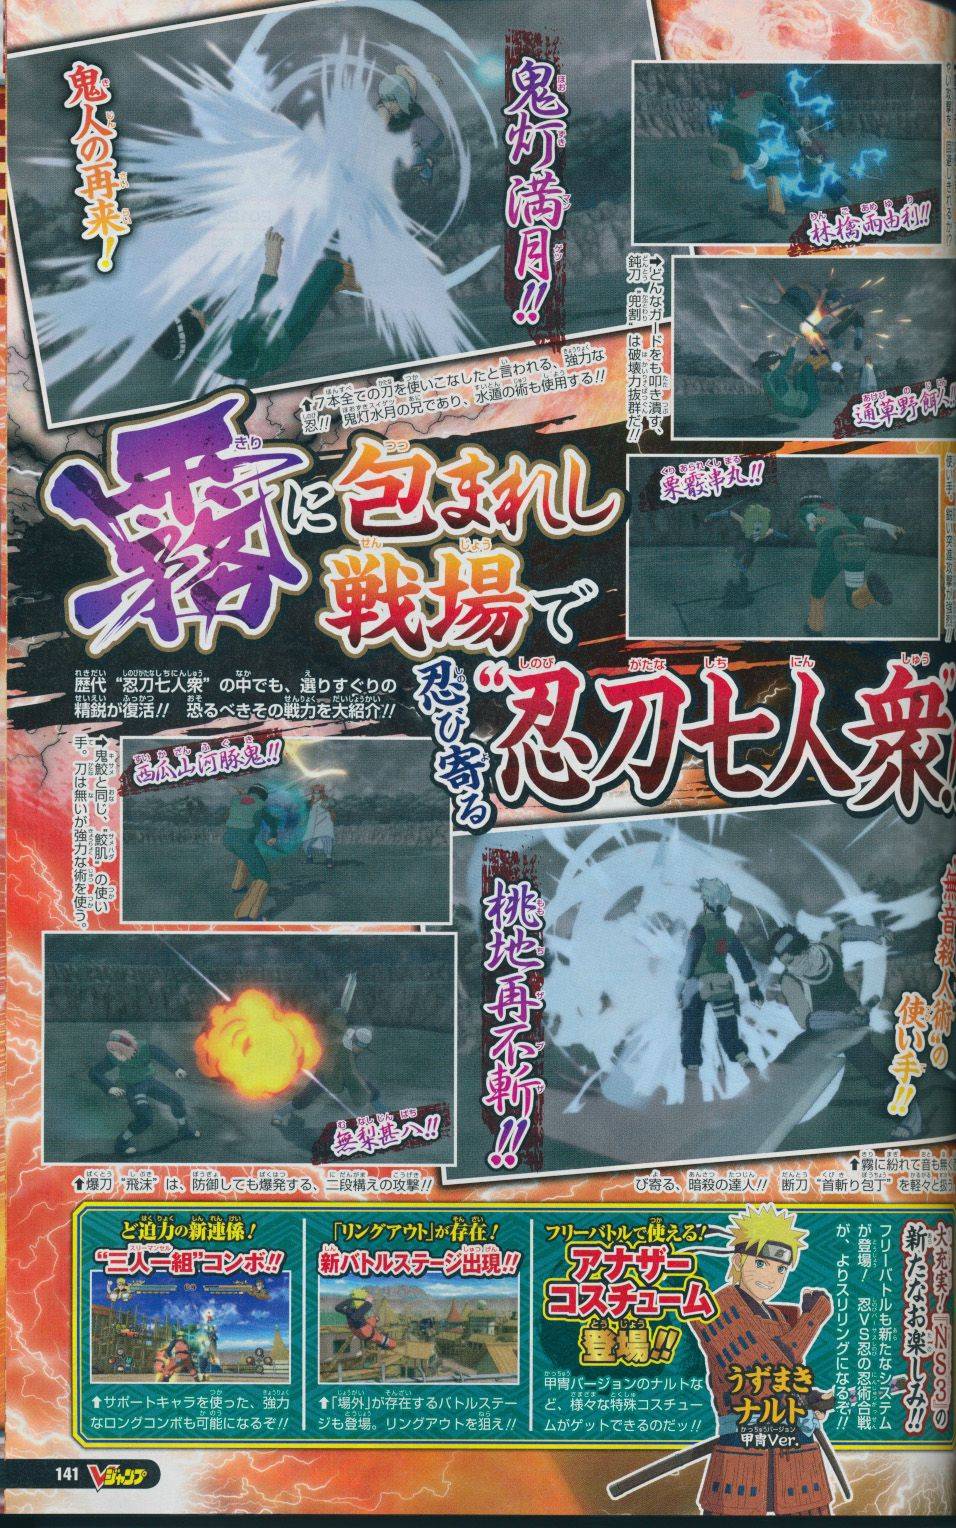  Naruto Shippuden Ultimate Ninja Storm 3 scan V Jump 2